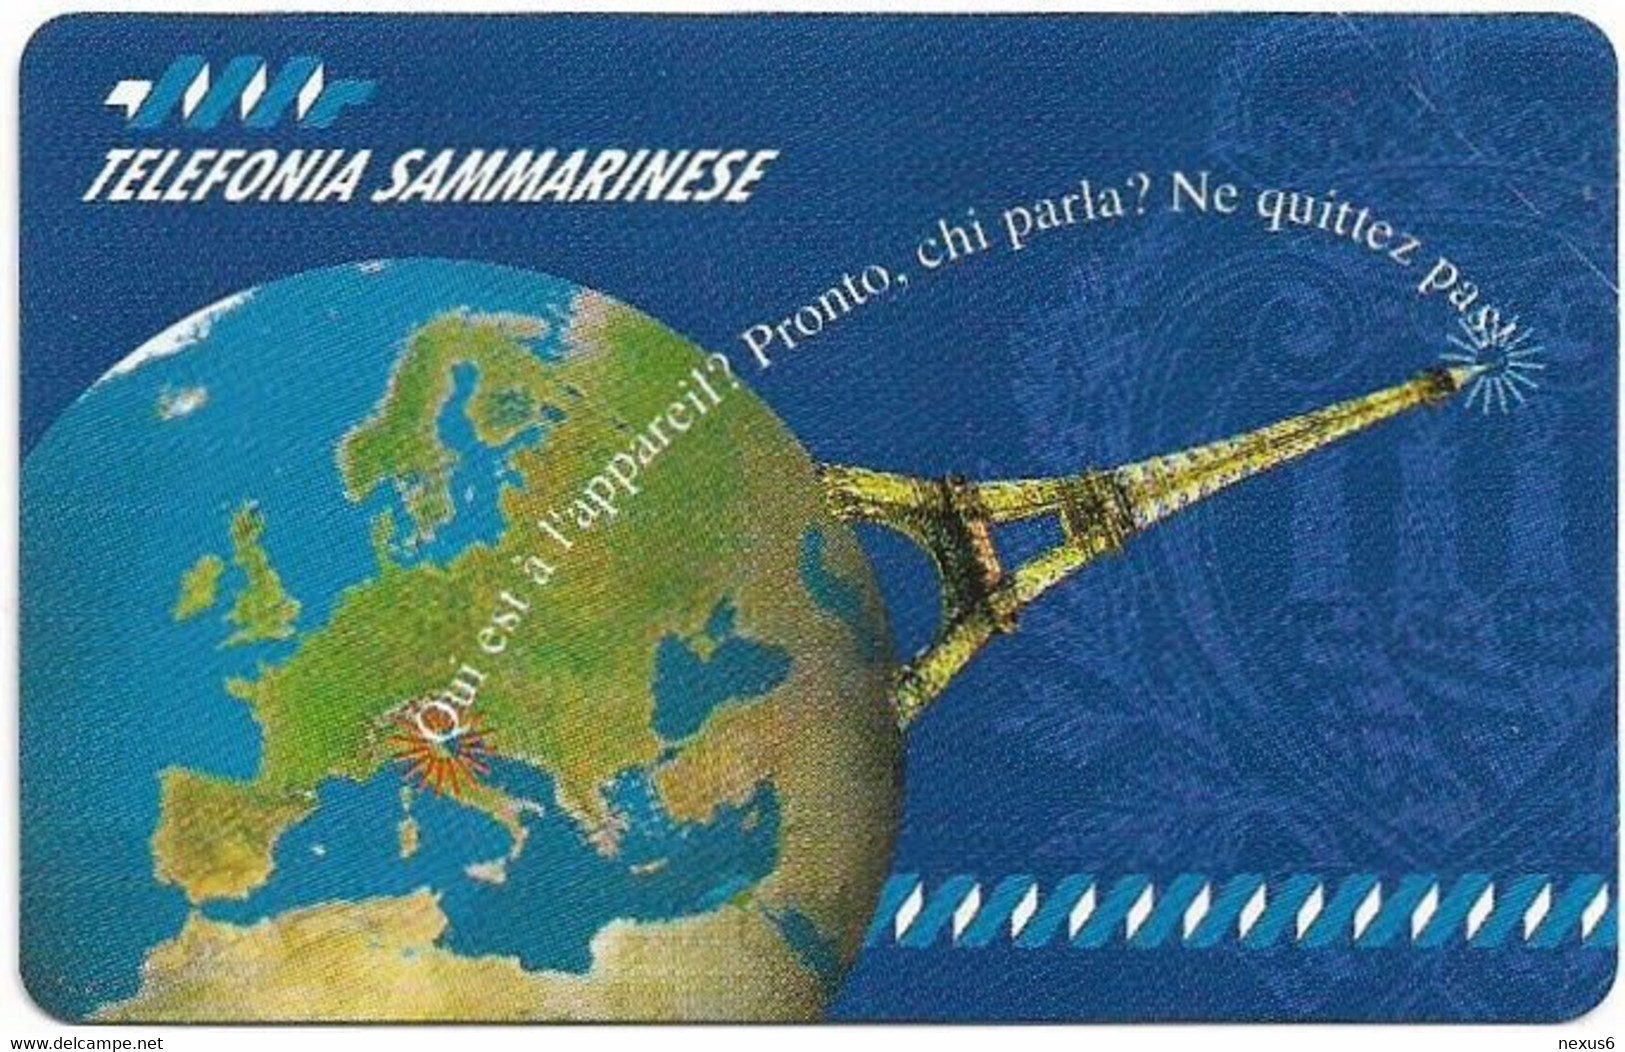 San Marino (URMET) - RSM-018 - Pronto, Chi Parla - Paris - 04.1997, 10.000L, 25.000ex, Mint - Saint-Marin